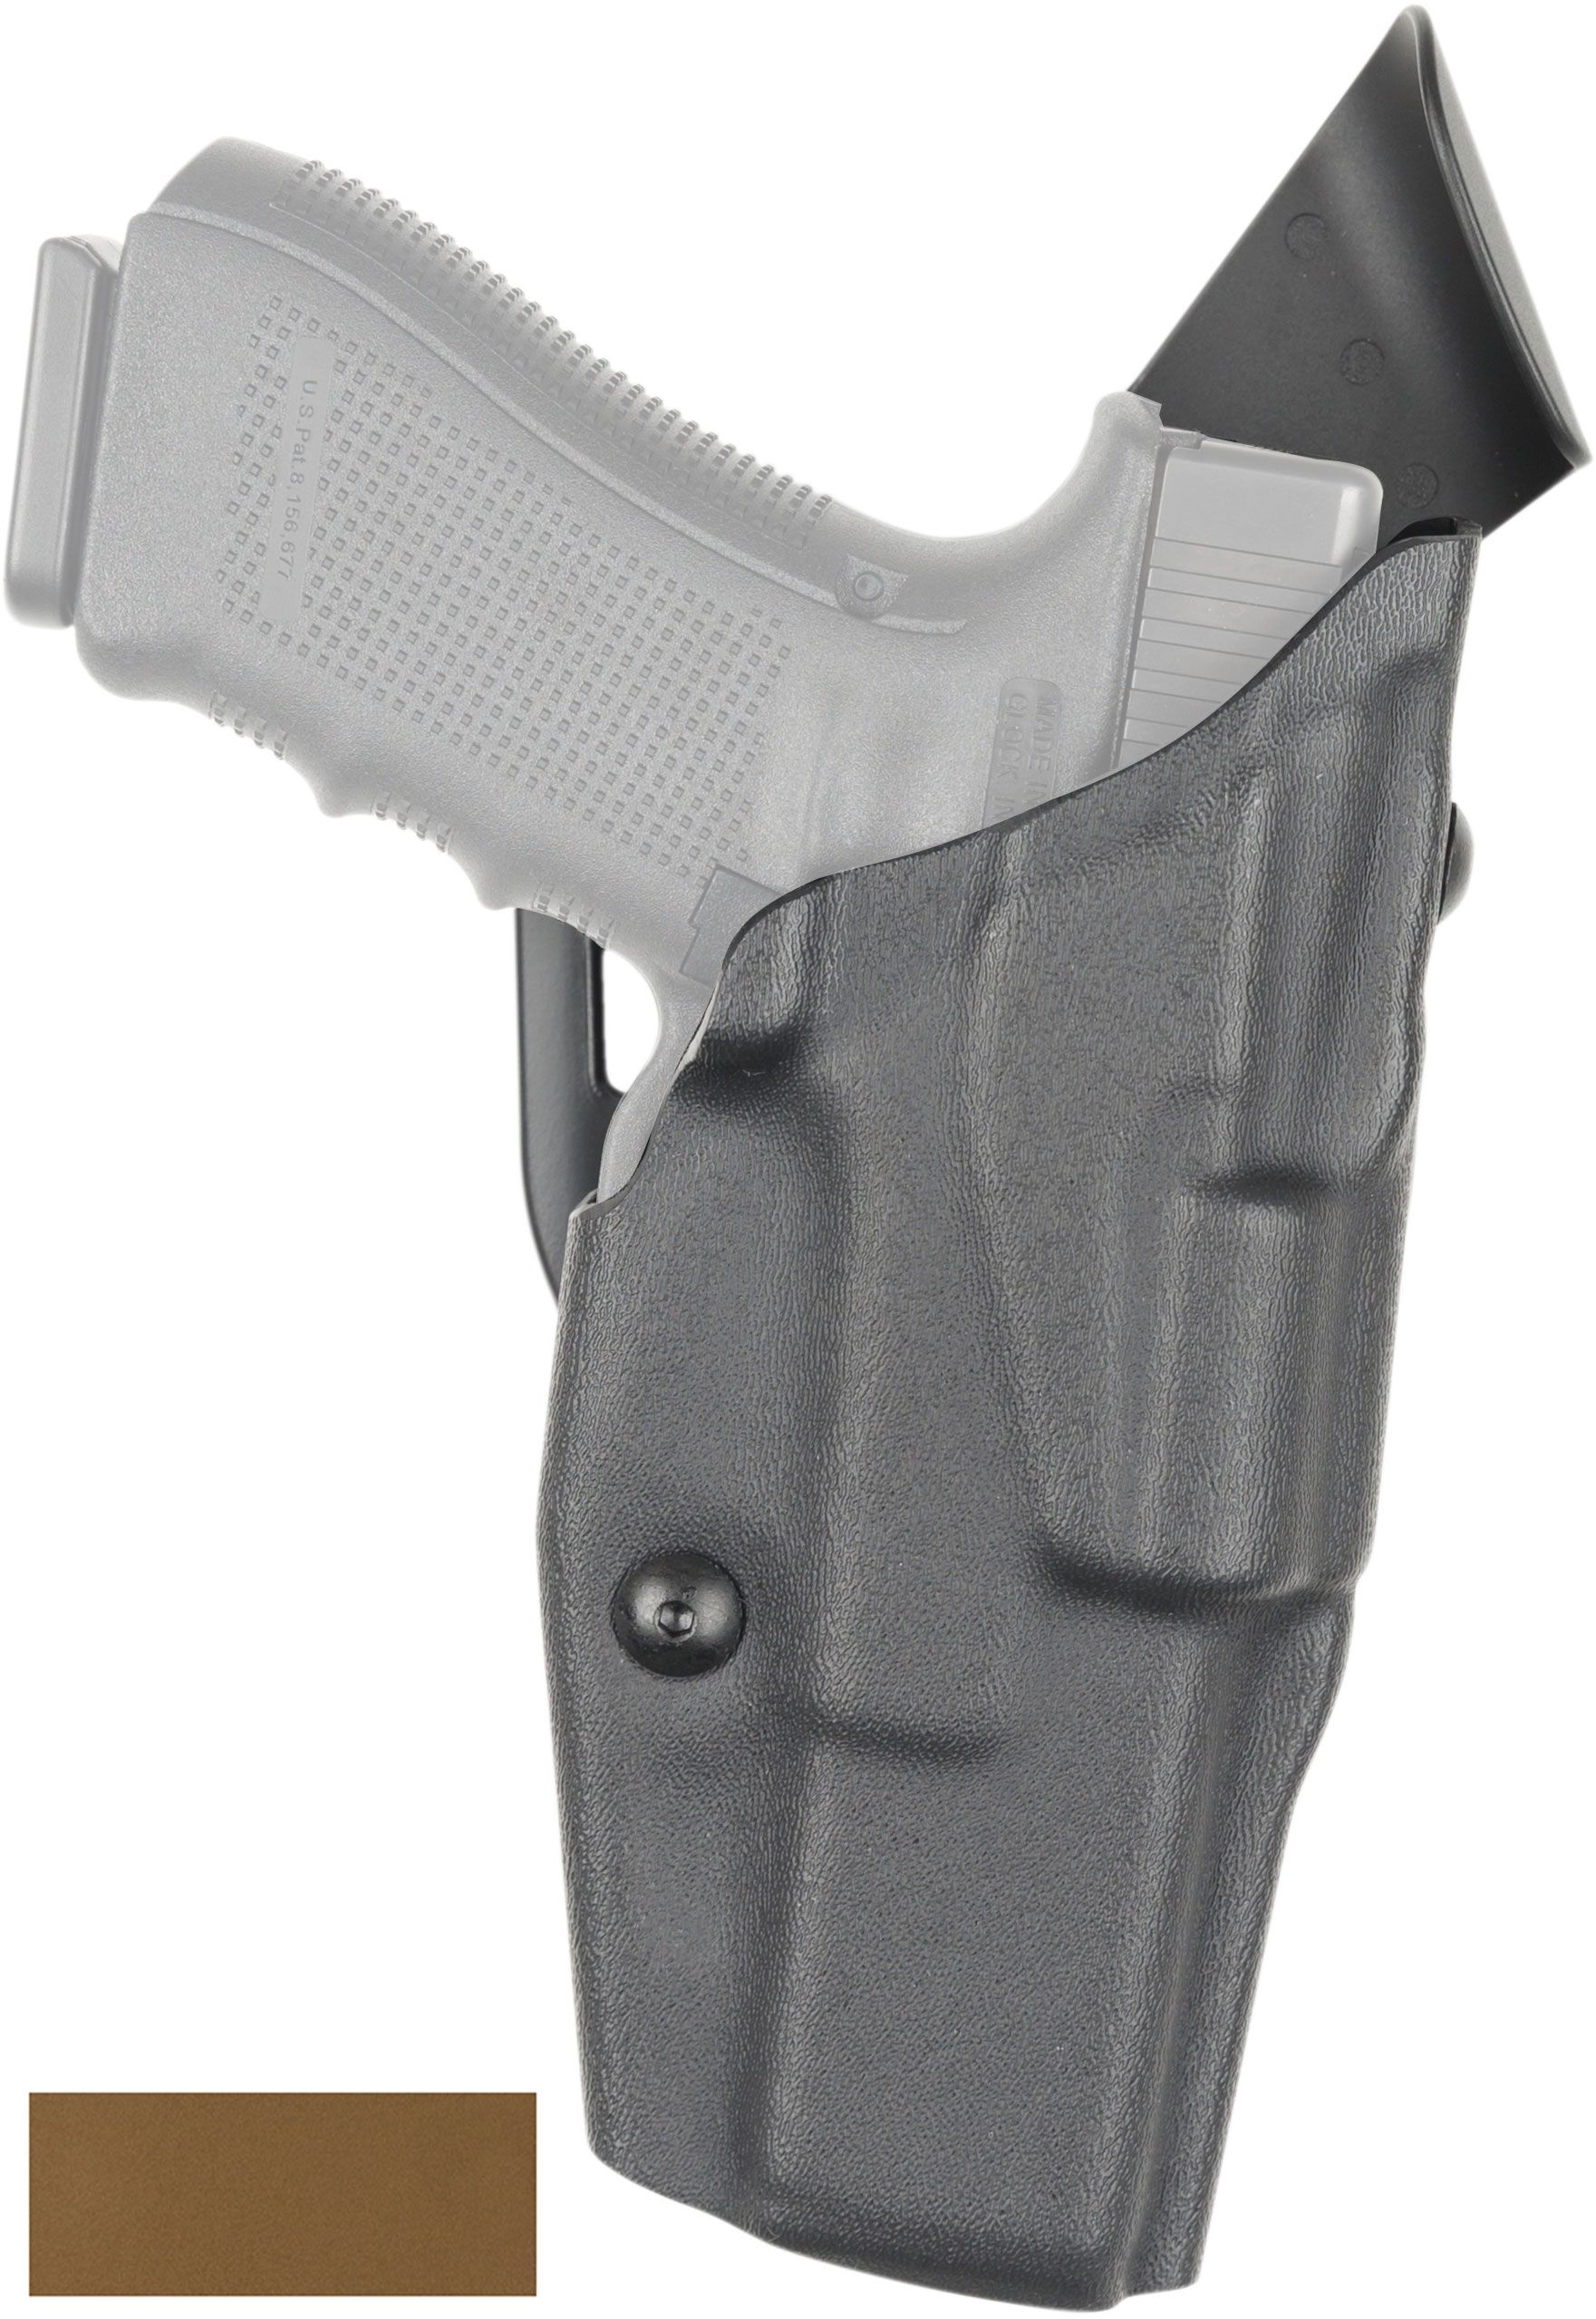 Safariland Model 6390 ALS Mid-Ride Level-I Duty Glock Holster : 6390-3832-761